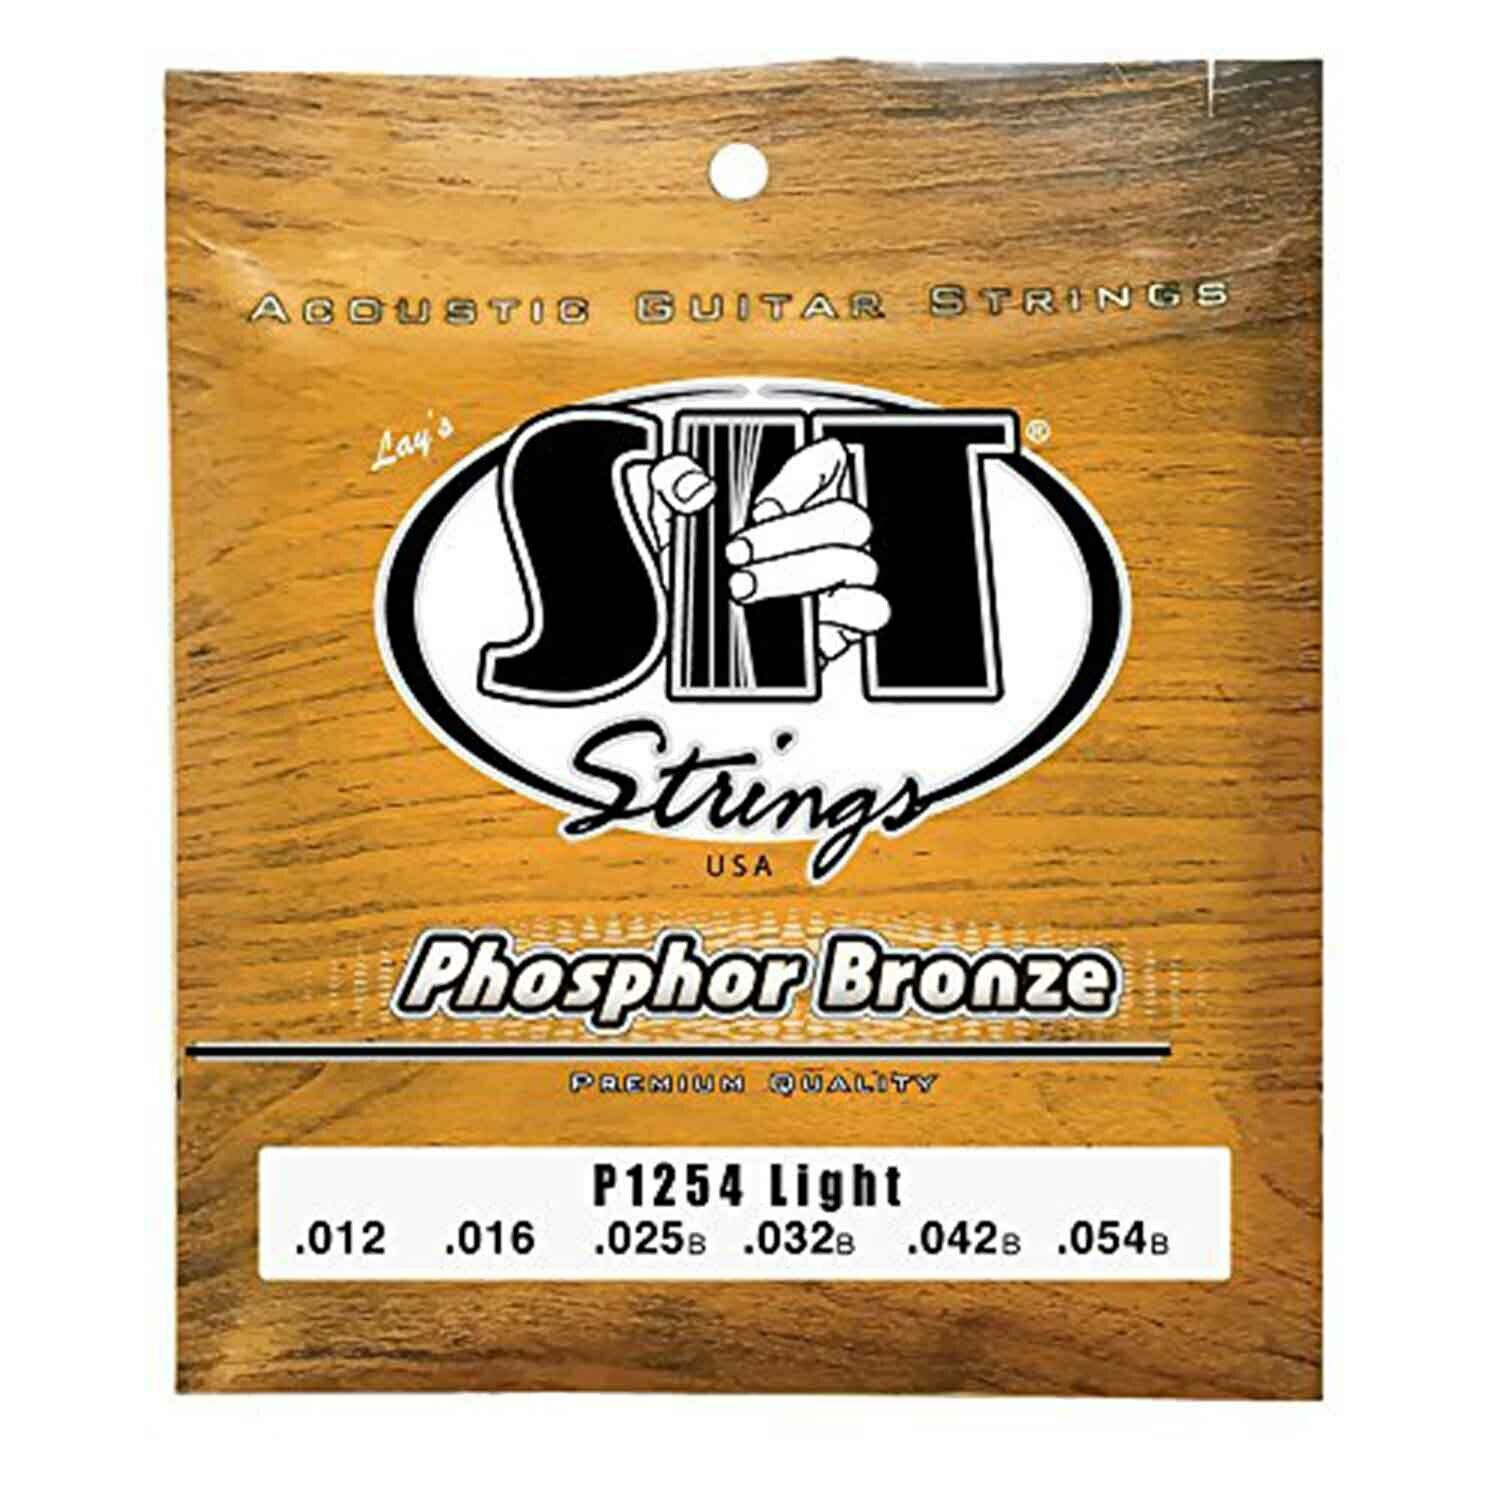 Sit Strings P1254 Light Phosphor Bronze Acoustic Guitar String